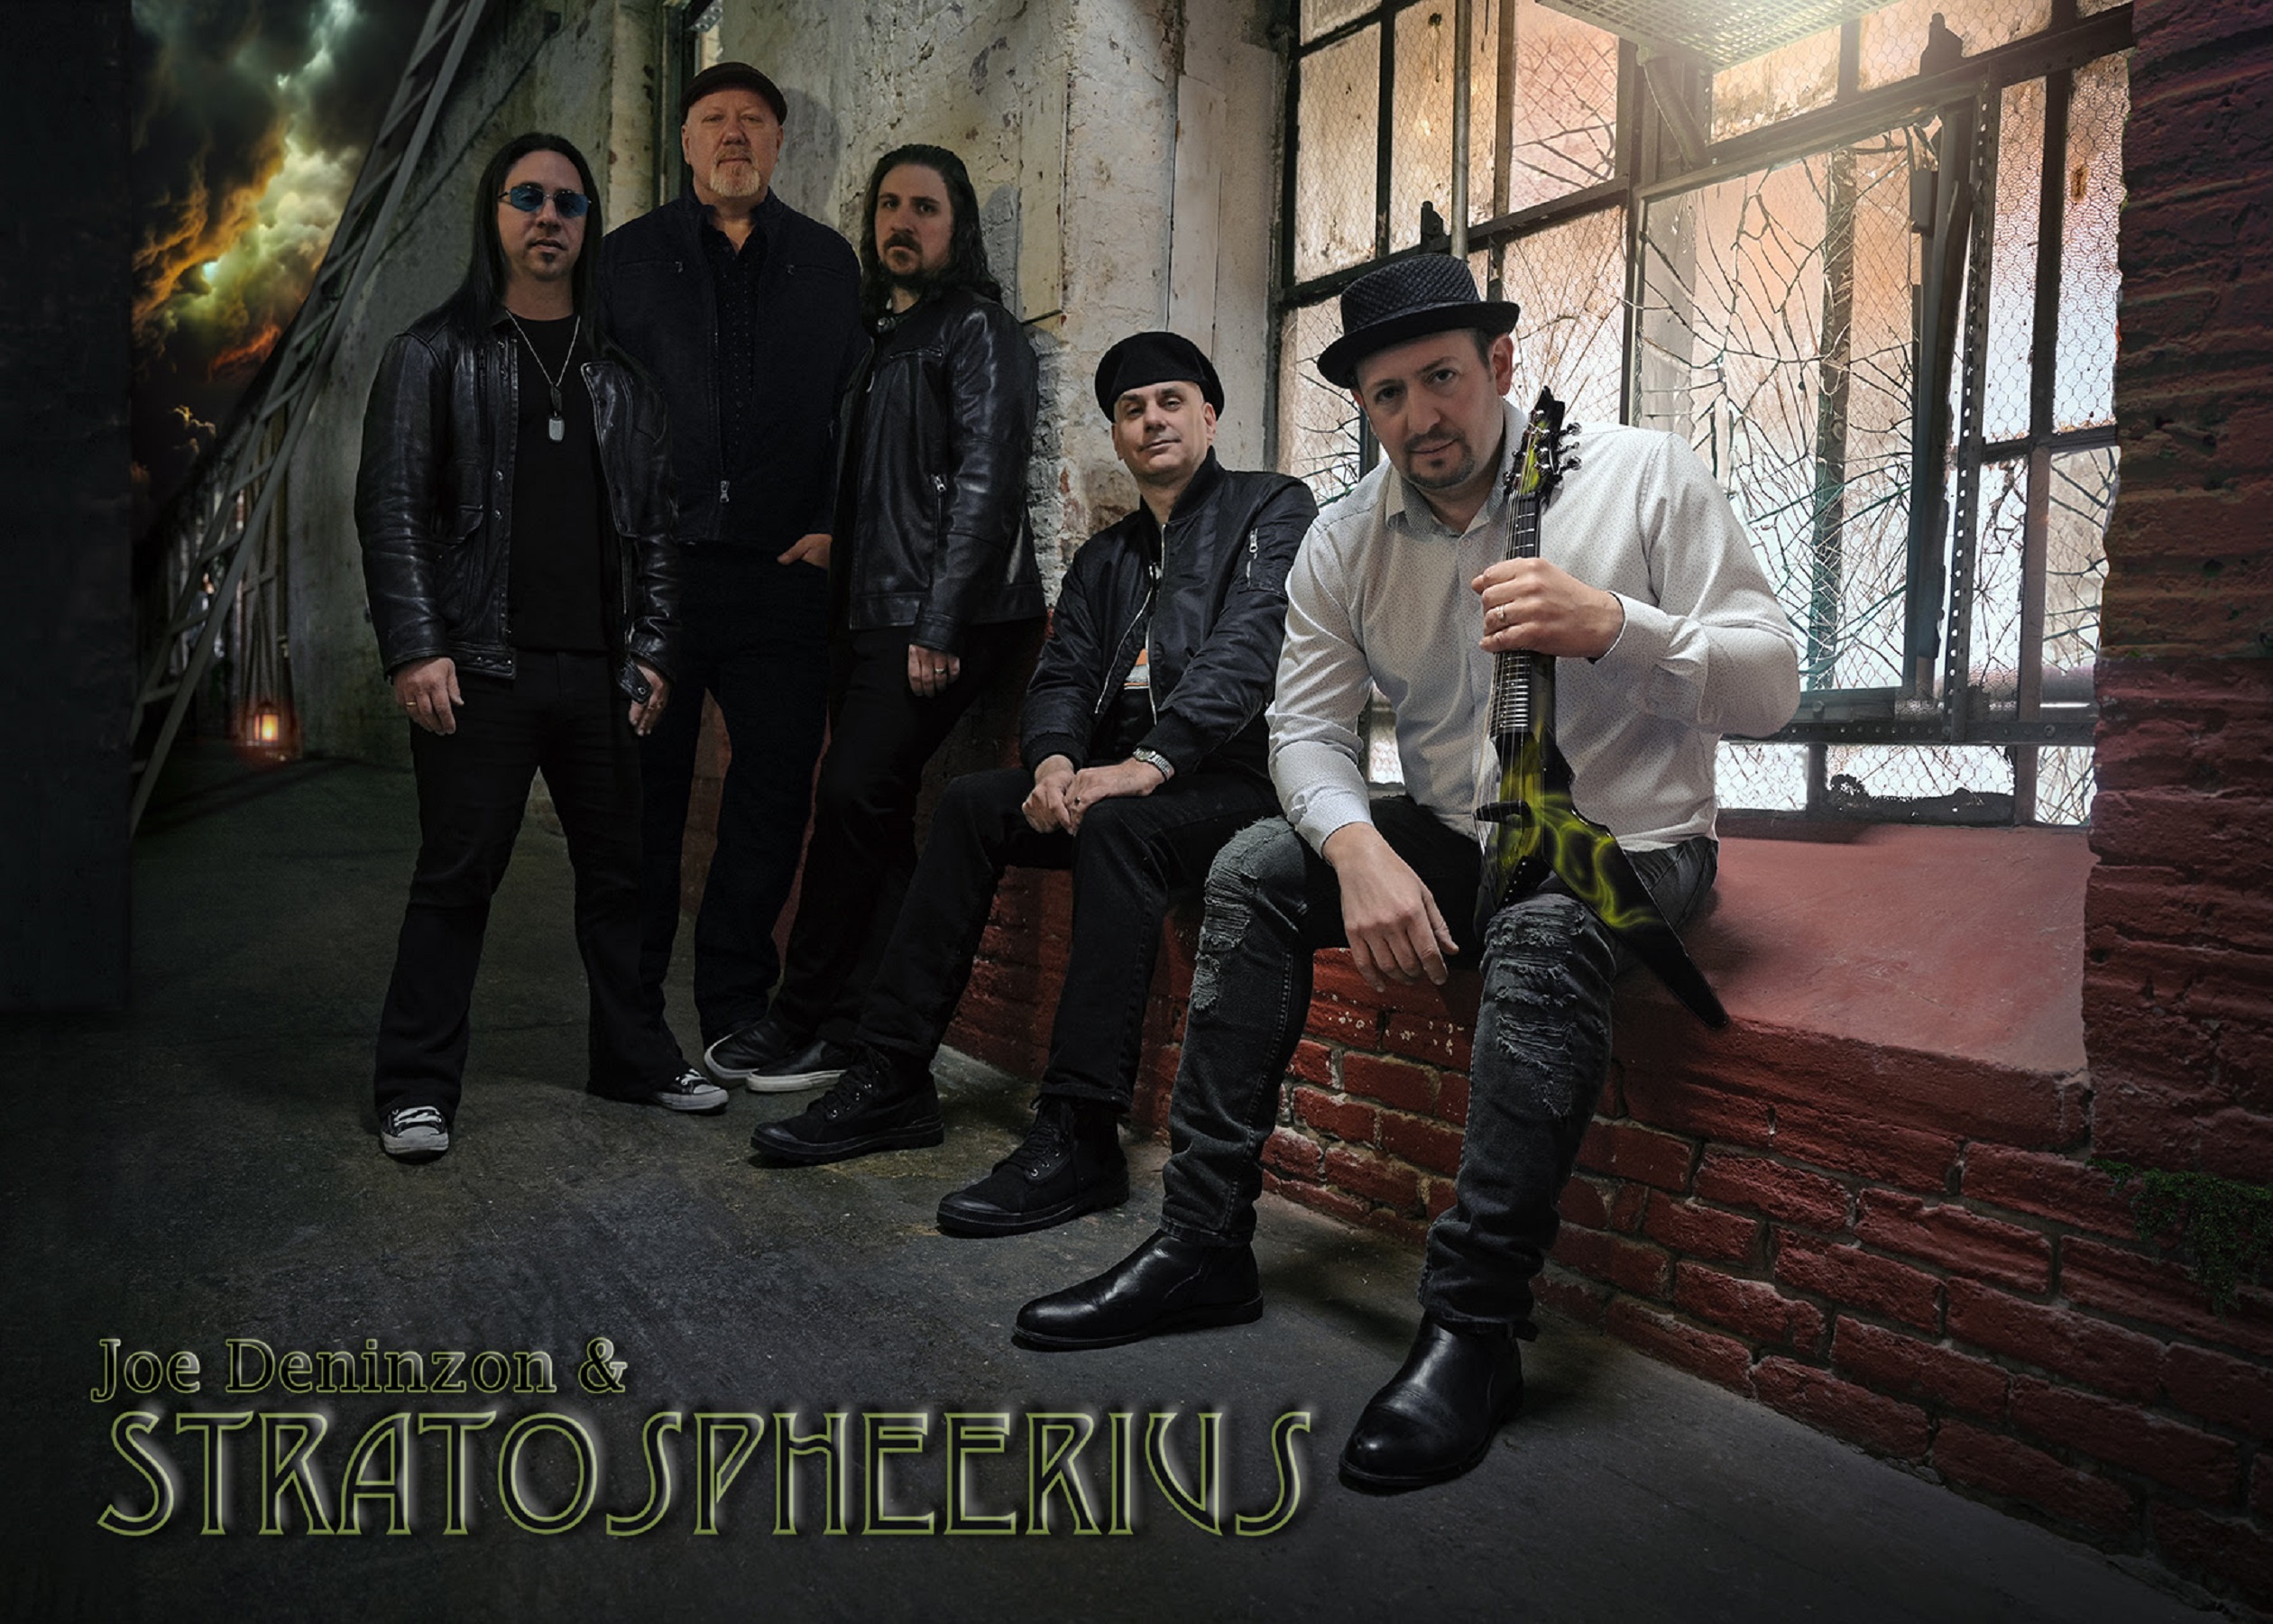 Joe Deninzon & Stratospheerius Joining Innovative Prog & Art Rock Label New Album Due Out October 11th.